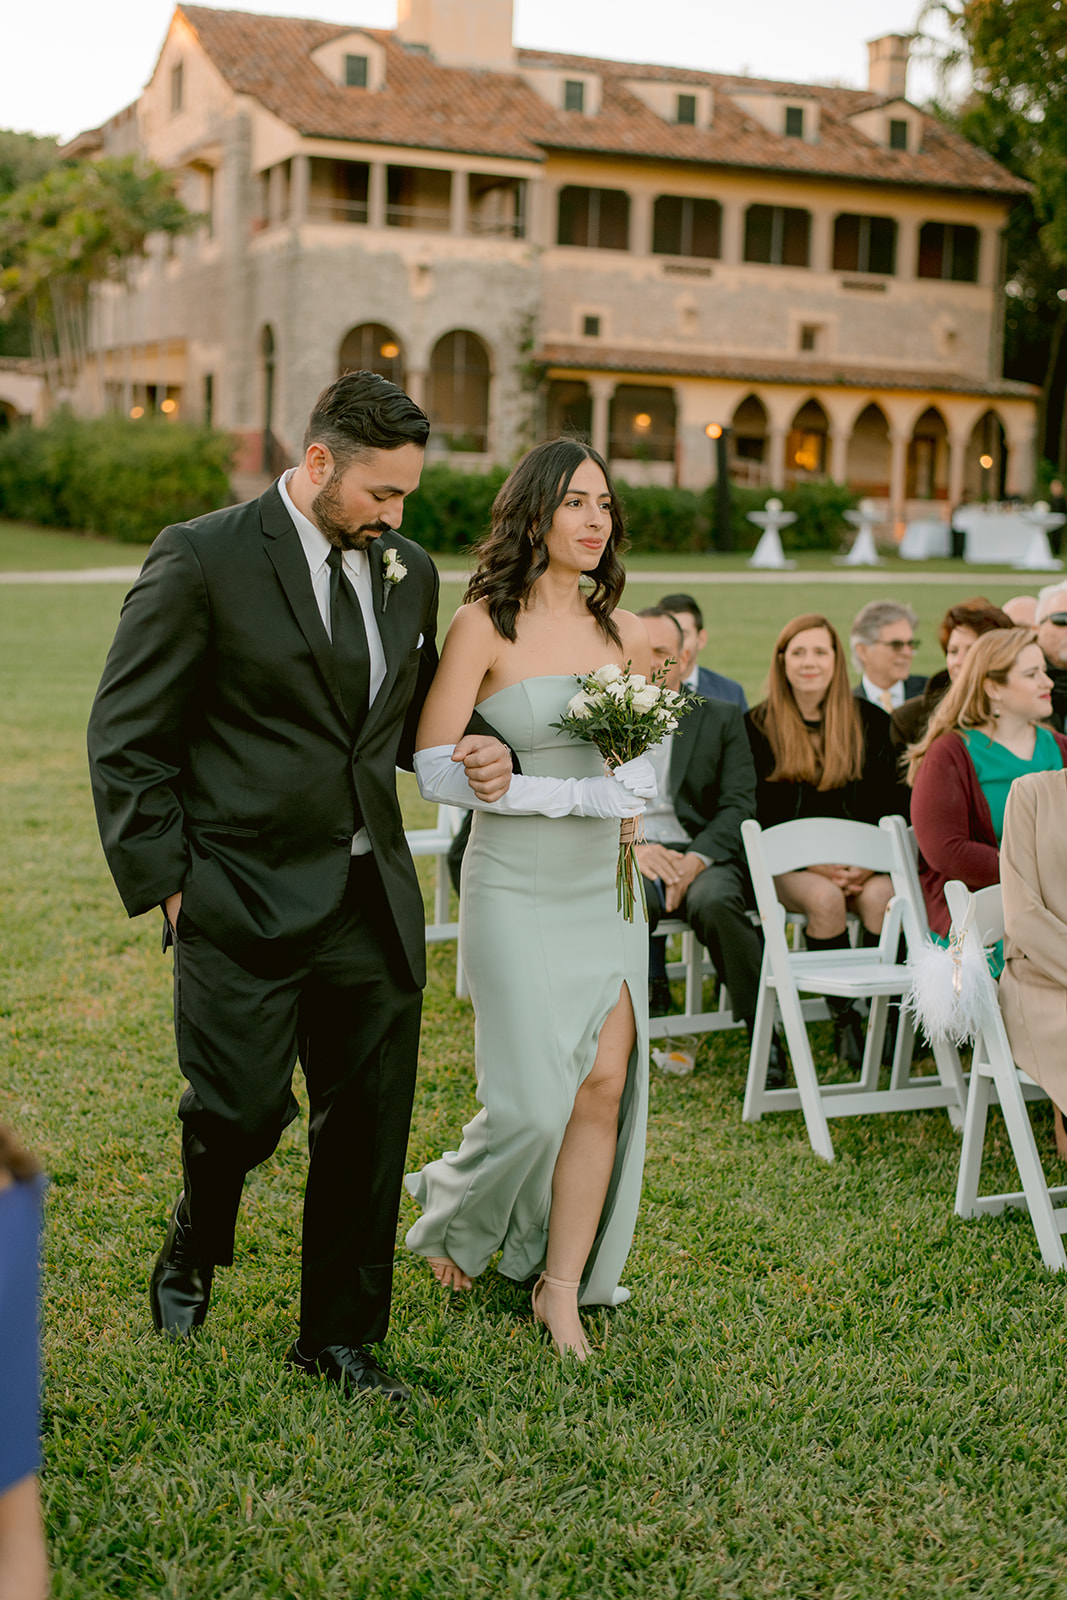 Miami Florida's finest wedding photographer captures Bales & Shelby's dream wedding
